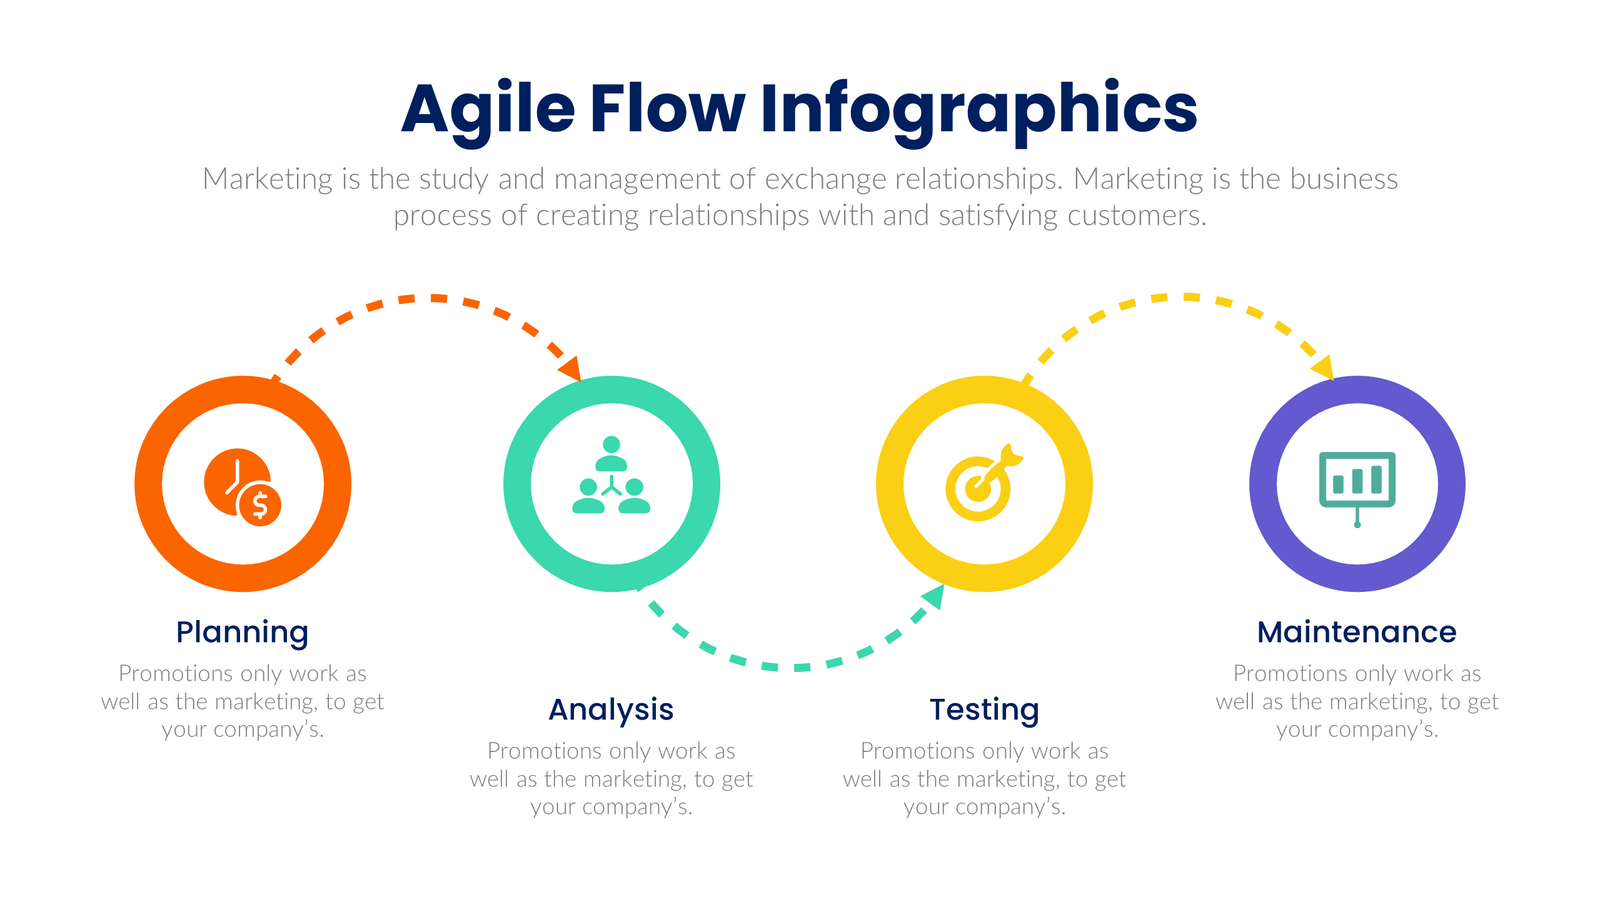 Agile Flow Infographics